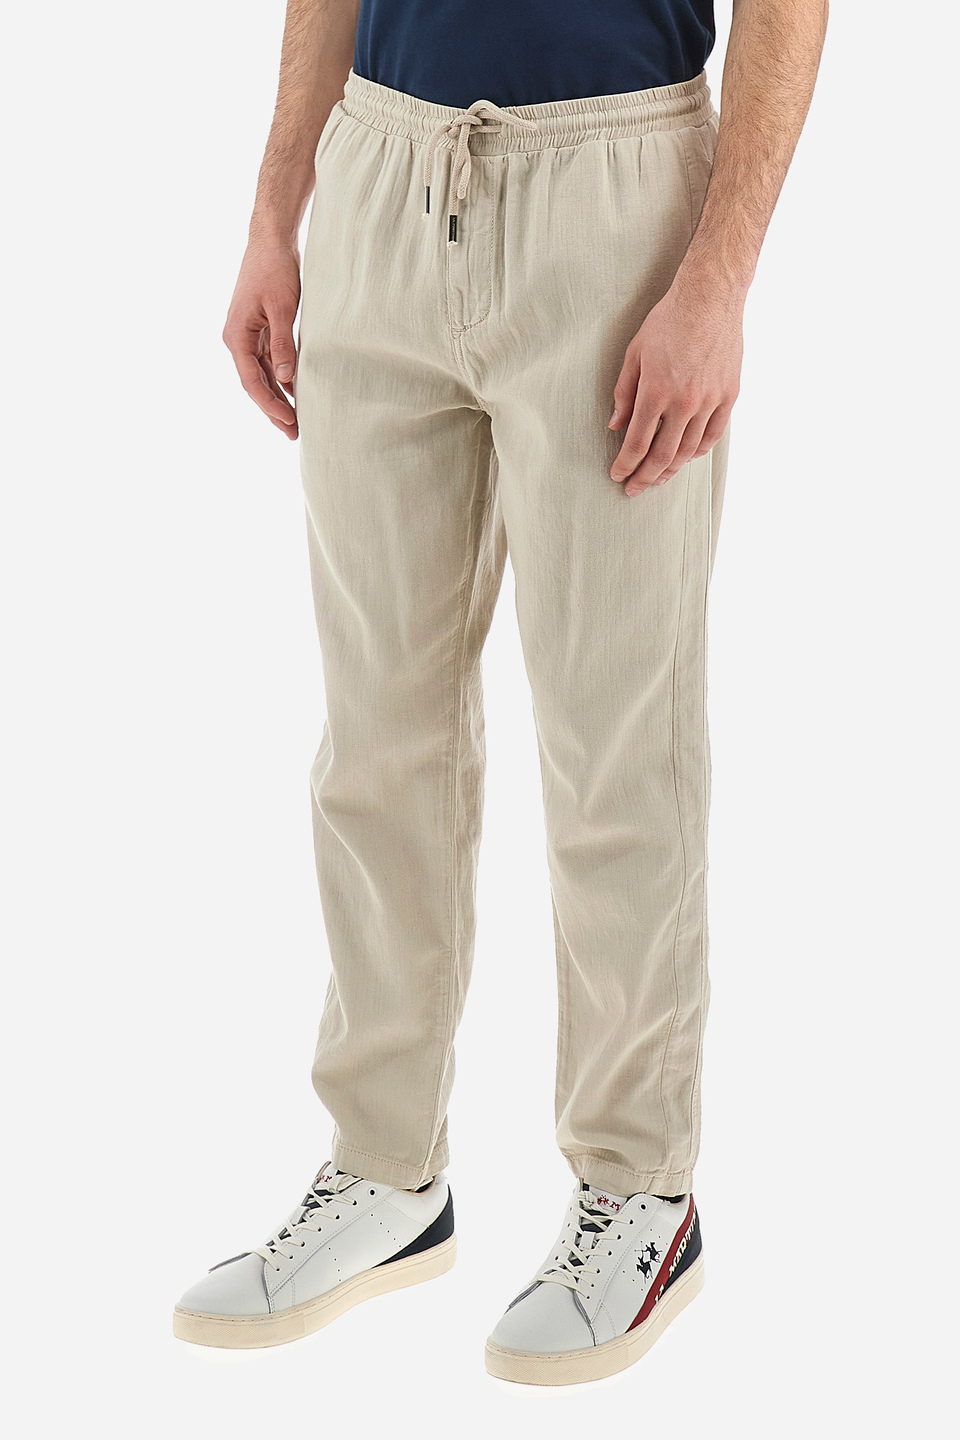 Pantalón regular fit de hombre en algodón y lino - Vann | La Martina - Official Online Shop